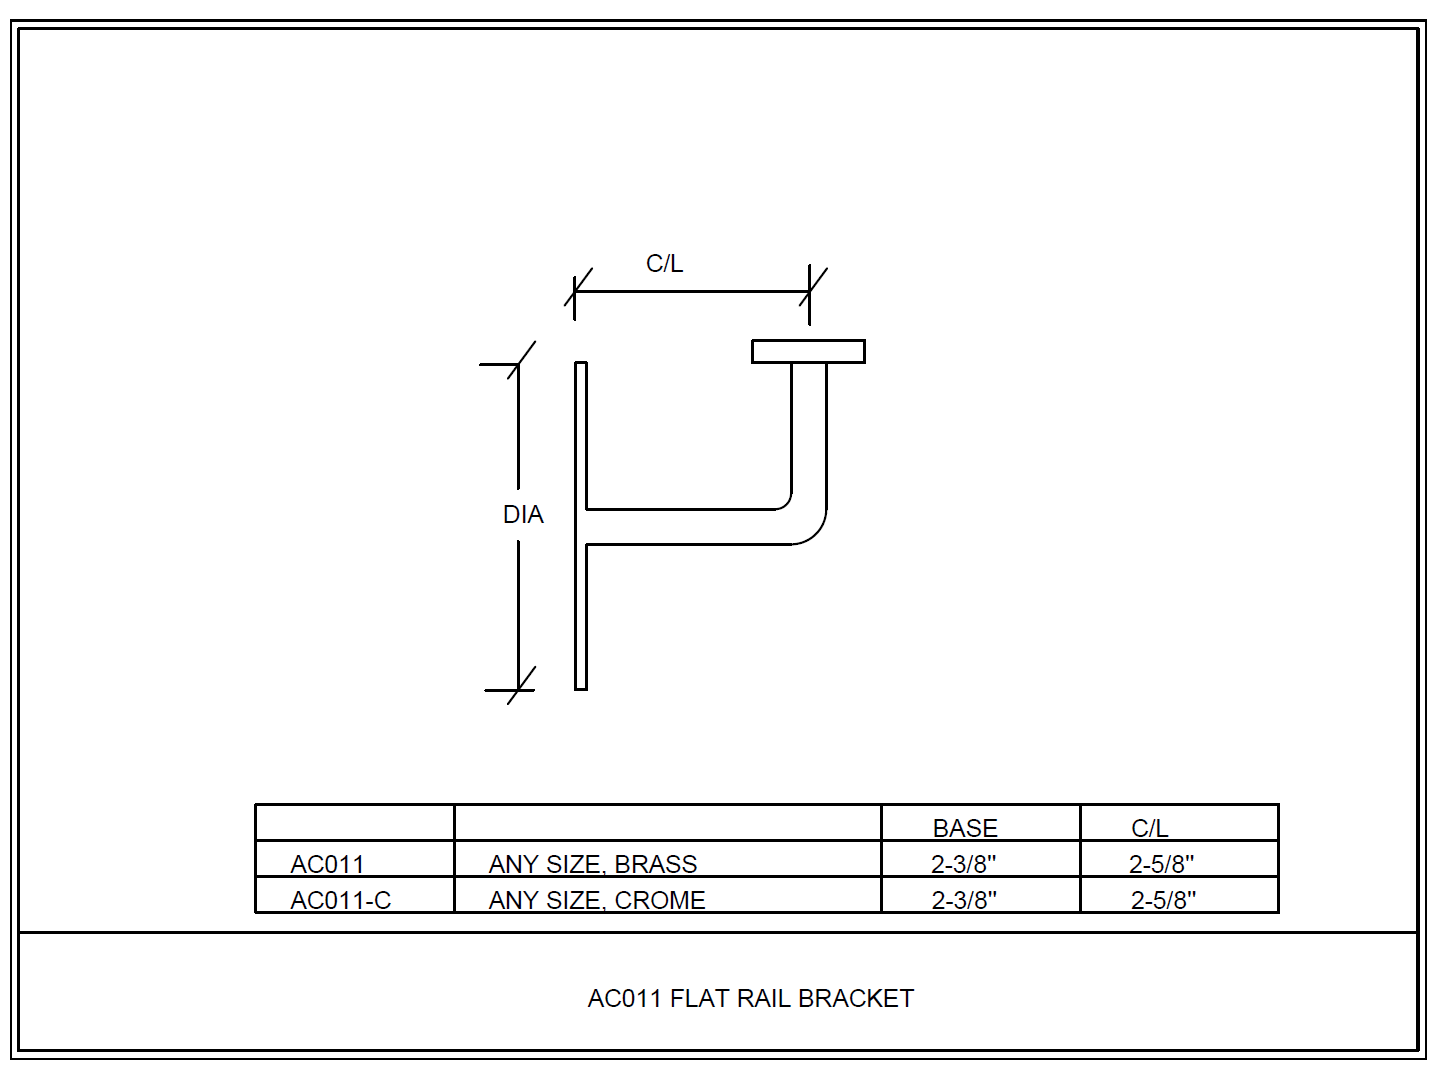 Flat handrail bracket for square or rectangular handrail tubing - All finishes